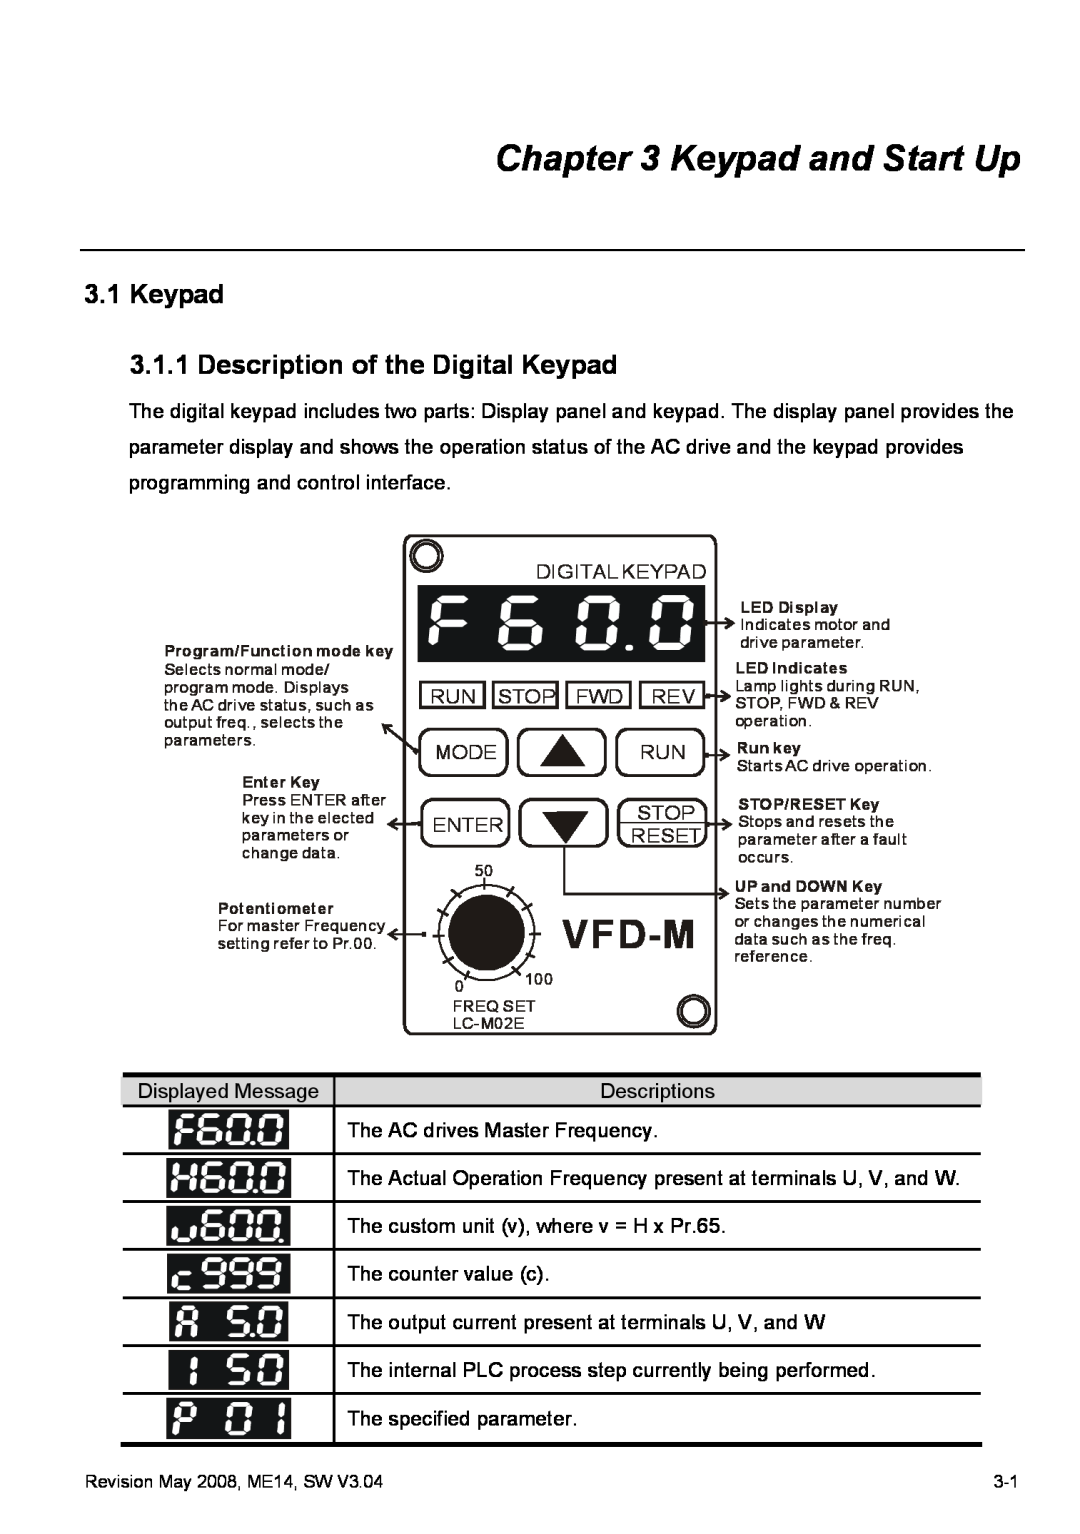 Delta Electronics VFD-M manual Keypad and Start Up, Keypad 3.1.1 Description of the Digital Keypad, Vfd-M 